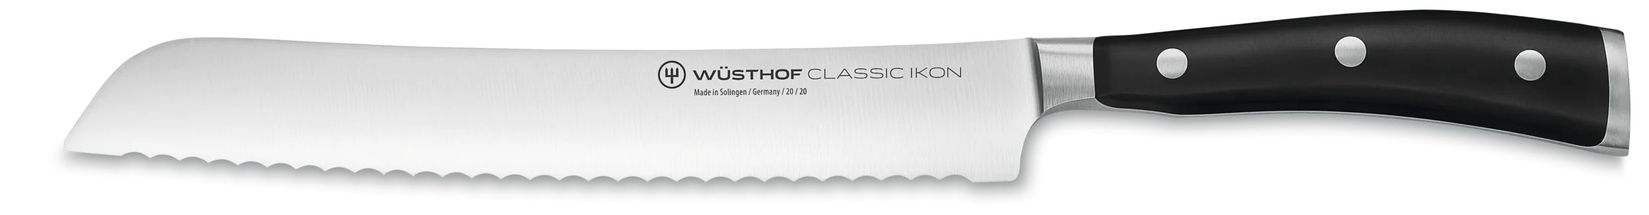 Wusthof Brotmesser Classic Ikon 20 cm